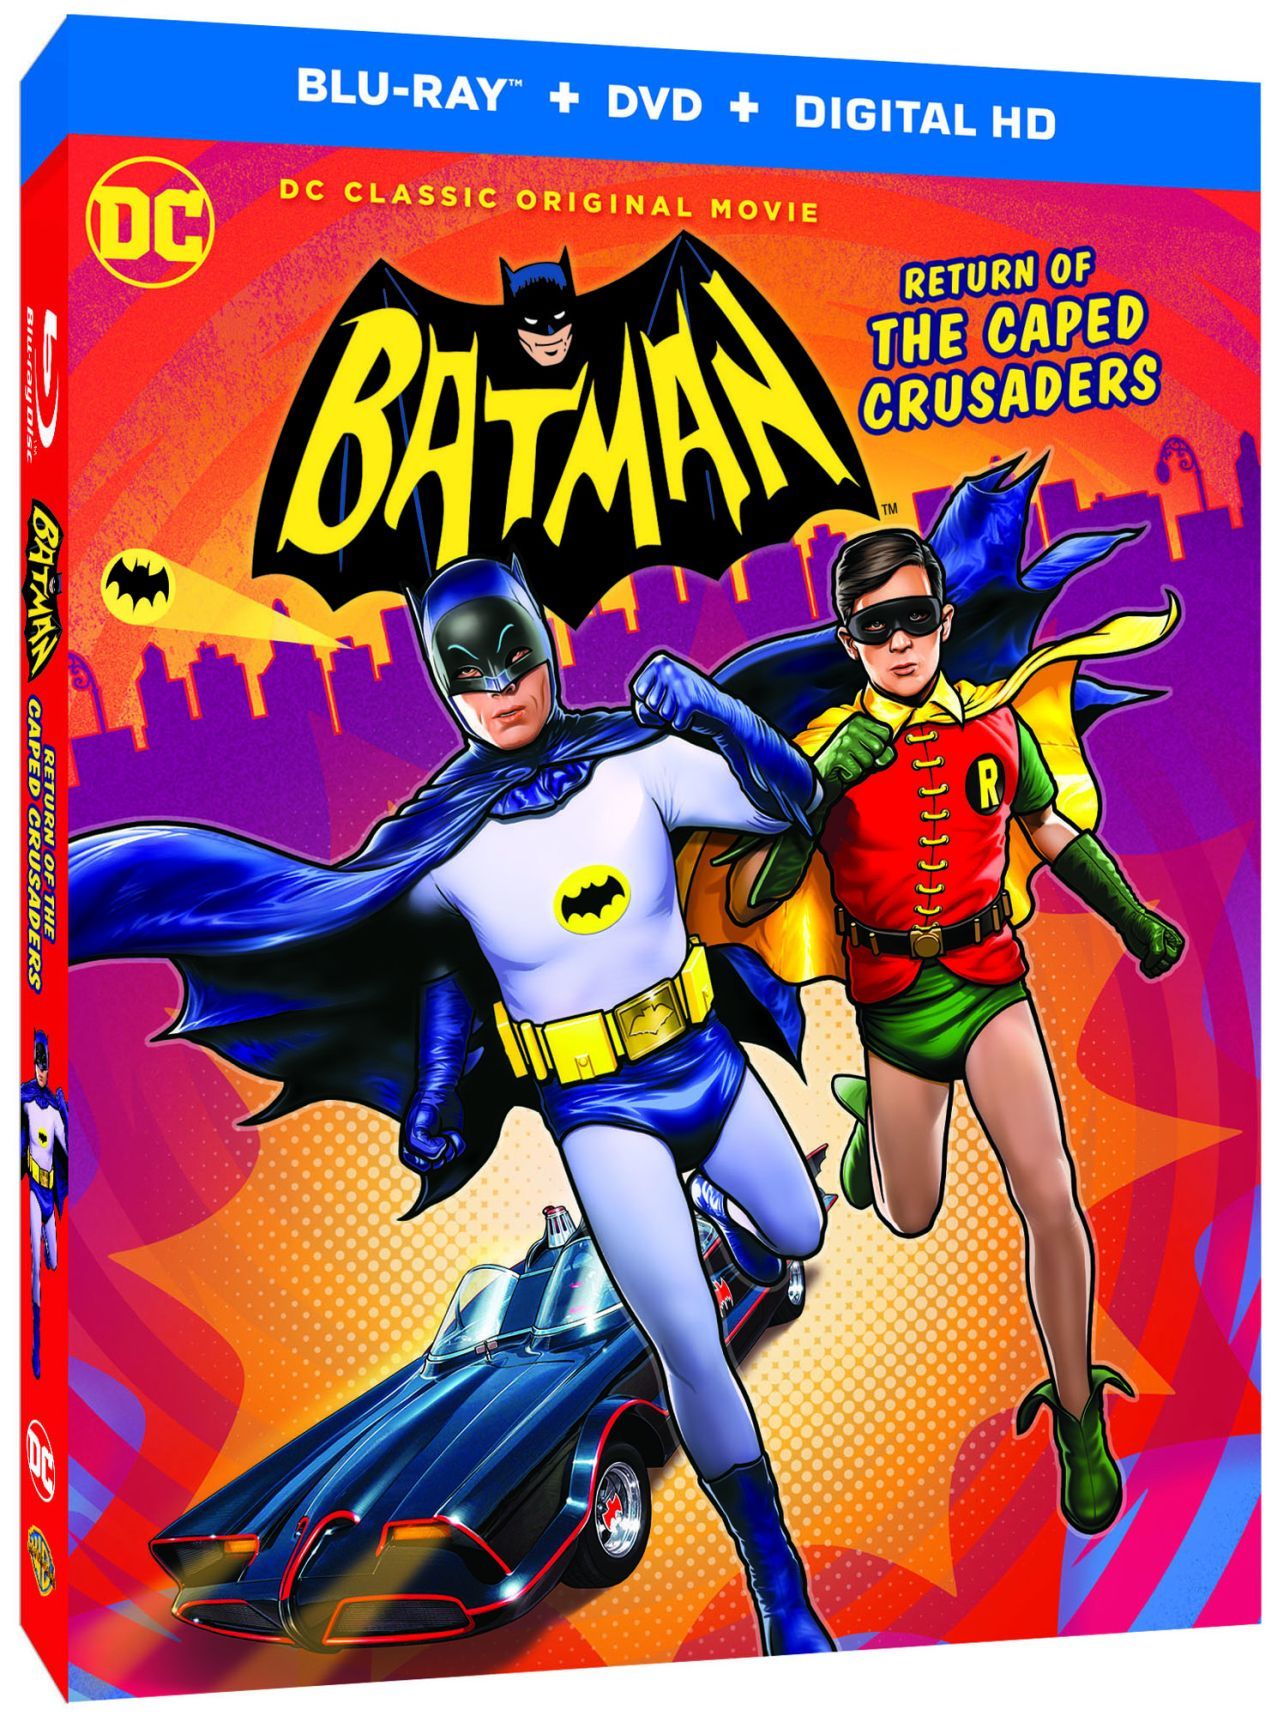 Batman: Return of the Caped Crusaders Blu-ray Artwork